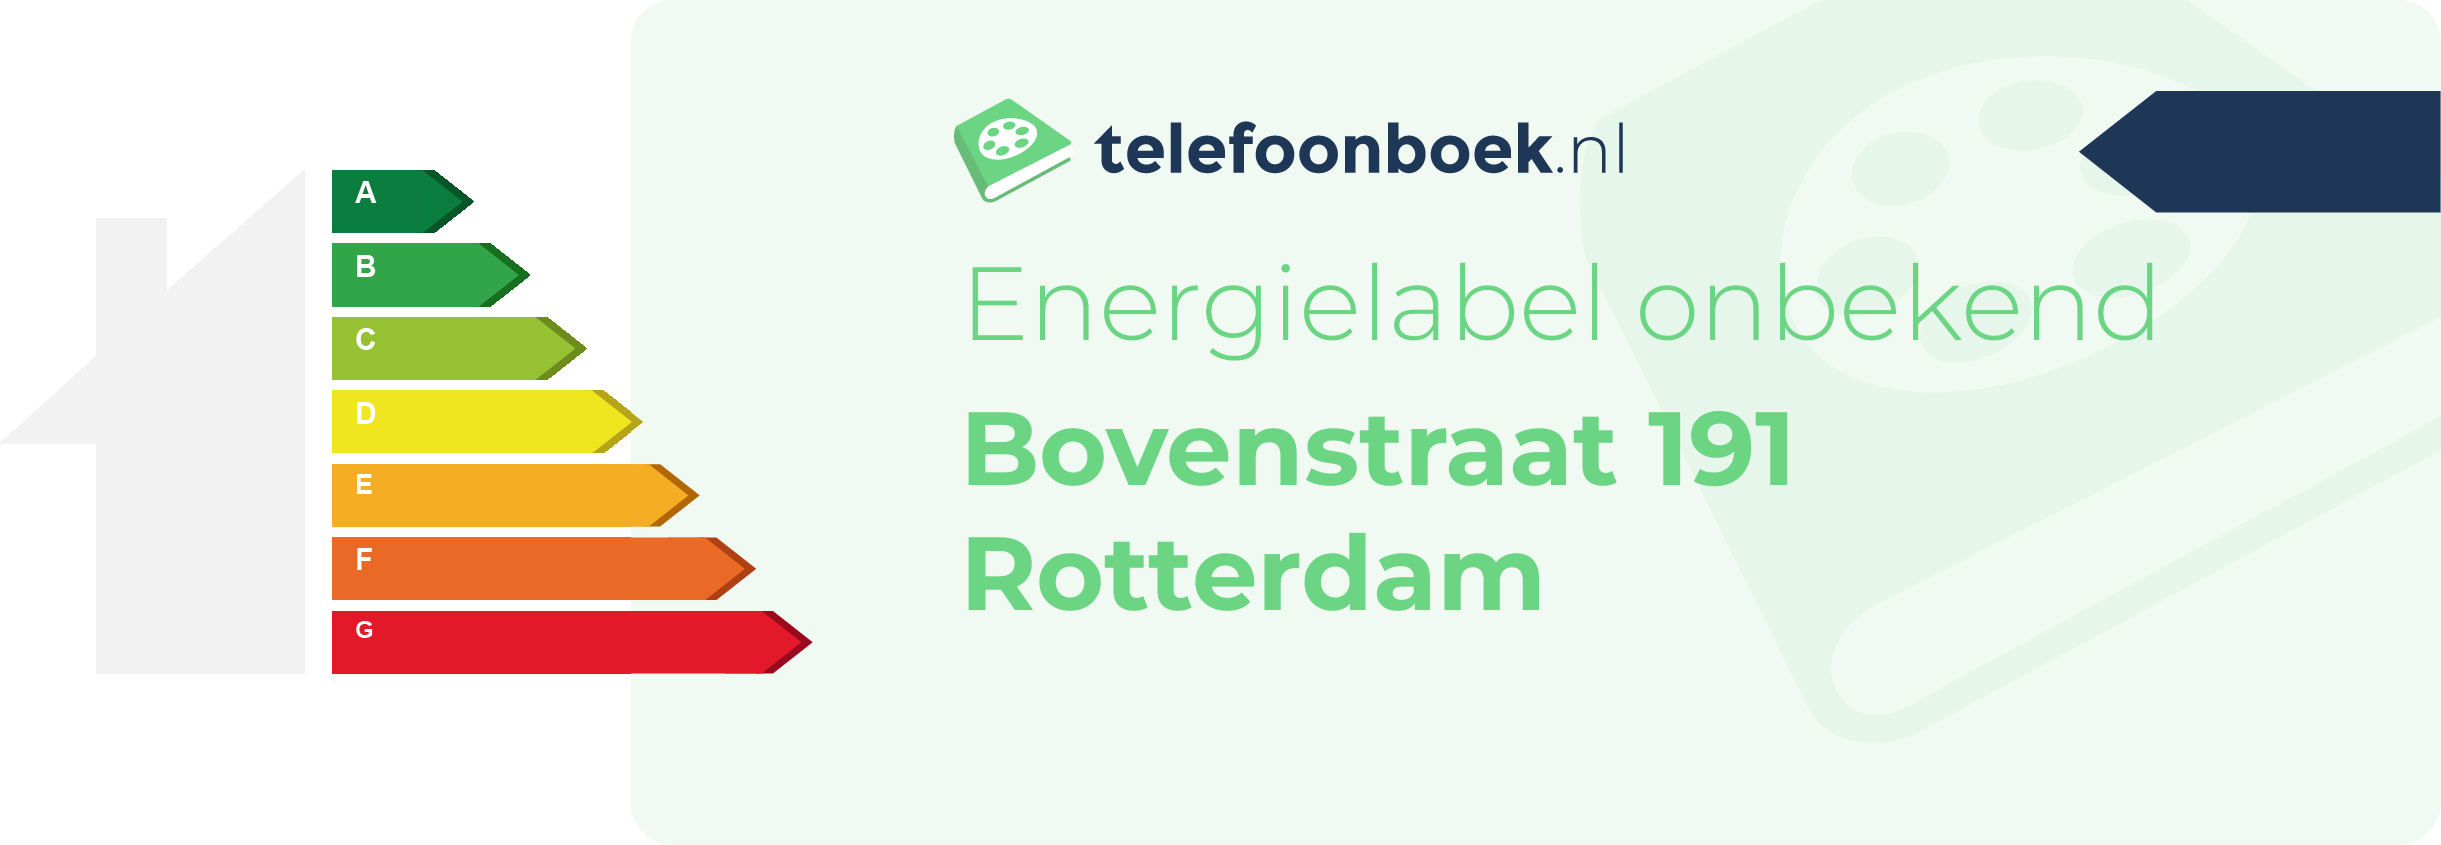 Energielabel Bovenstraat 191 Rotterdam